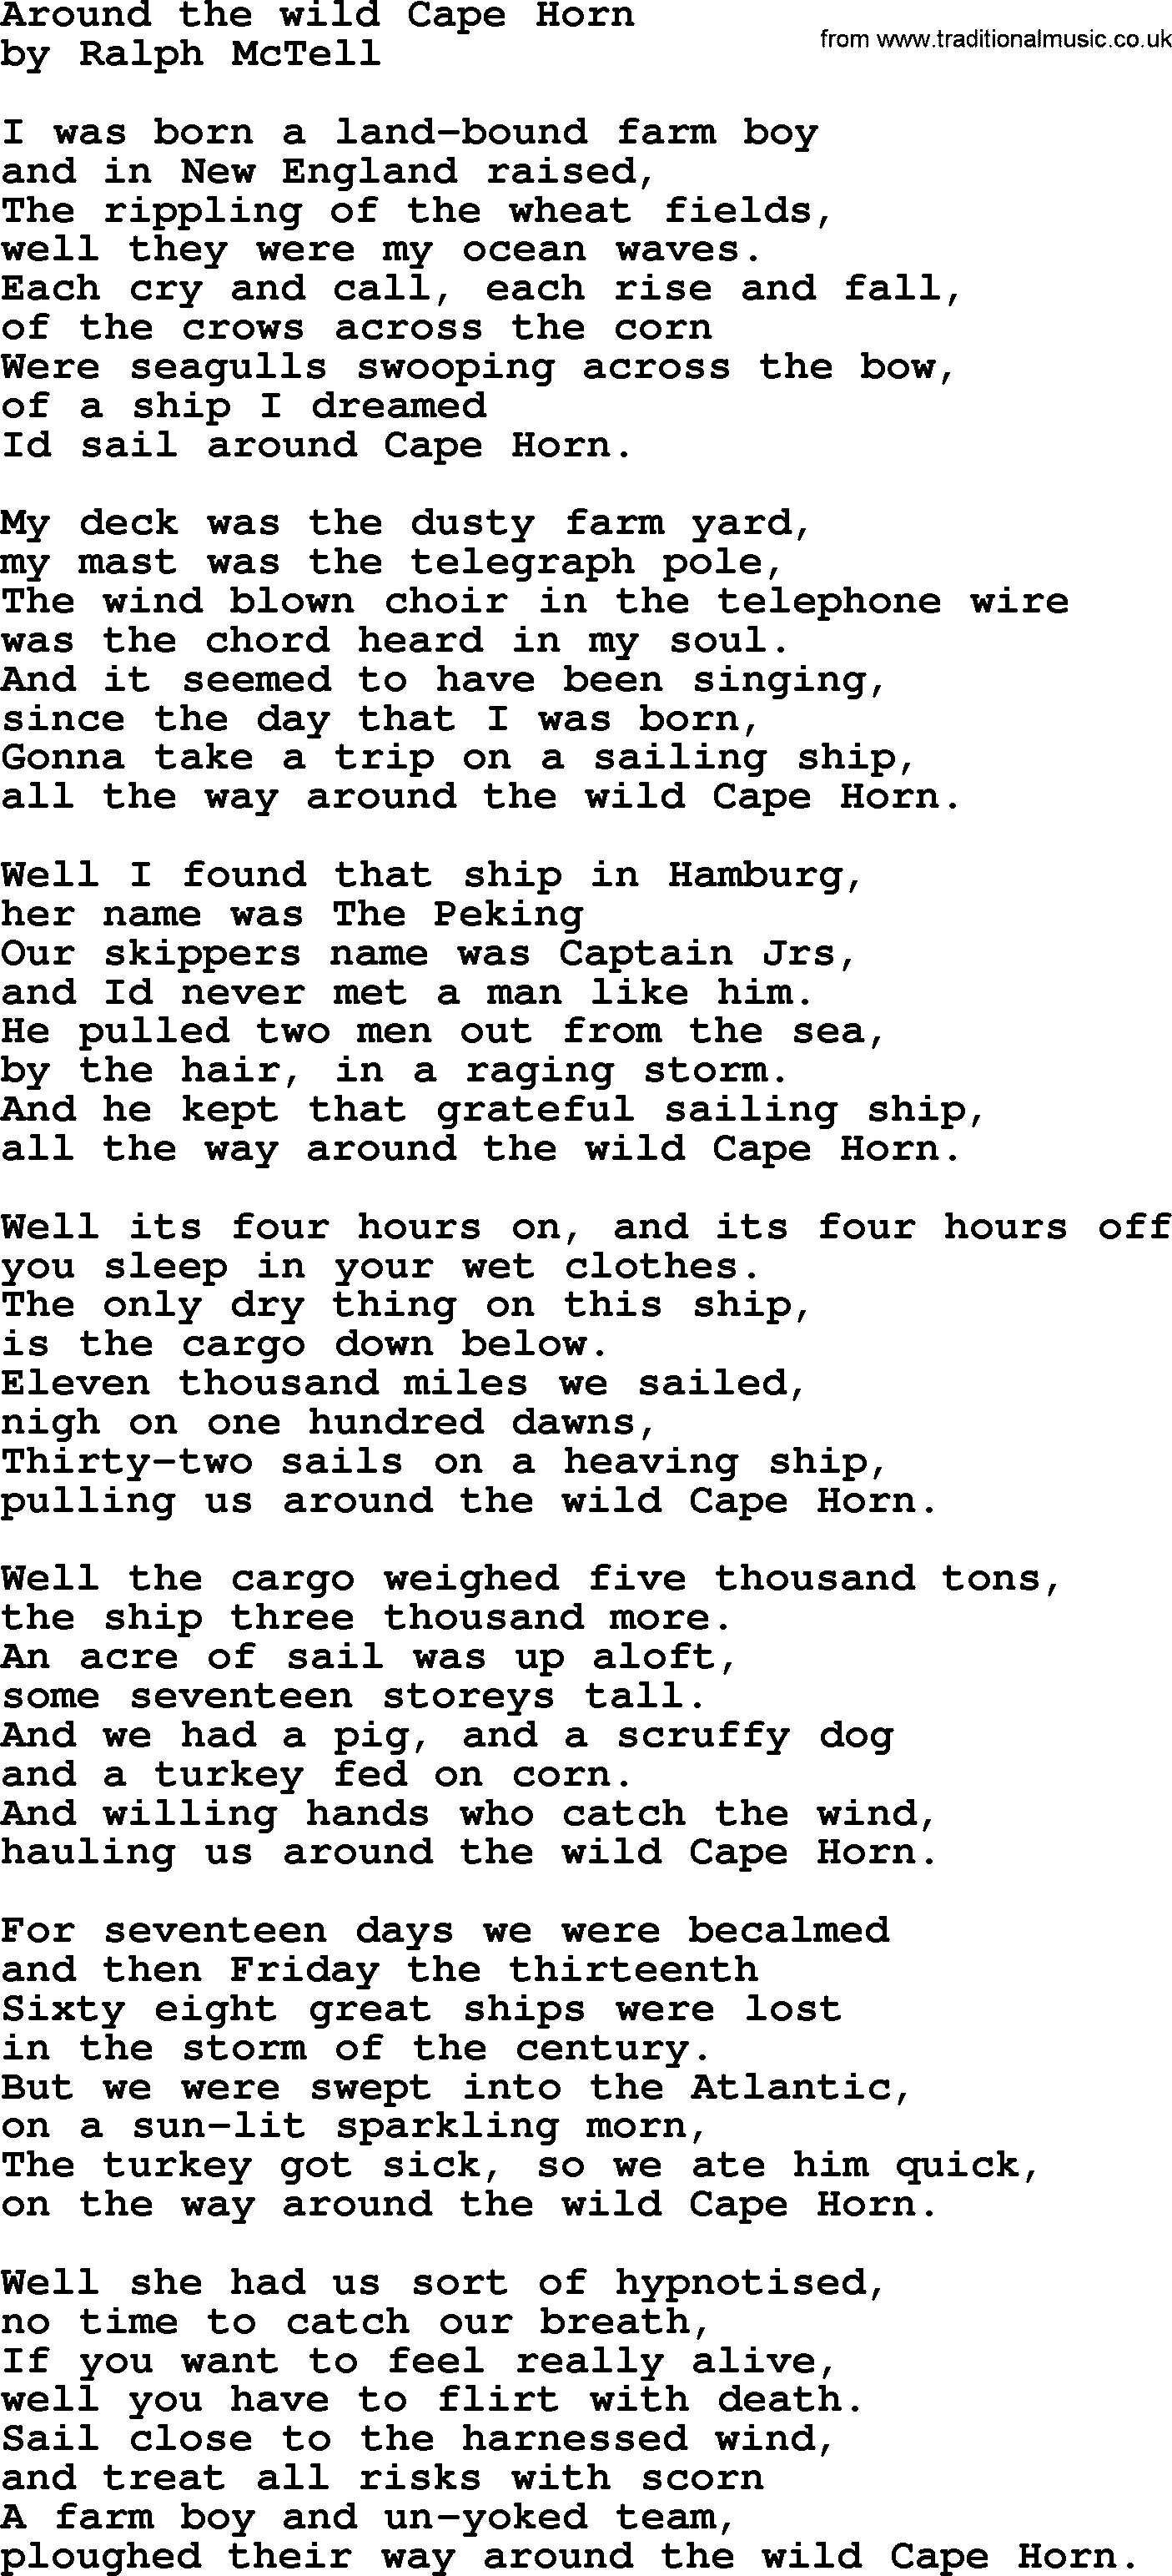 Ralph McTell Song: Around The Wild Cape Horn, lyrics